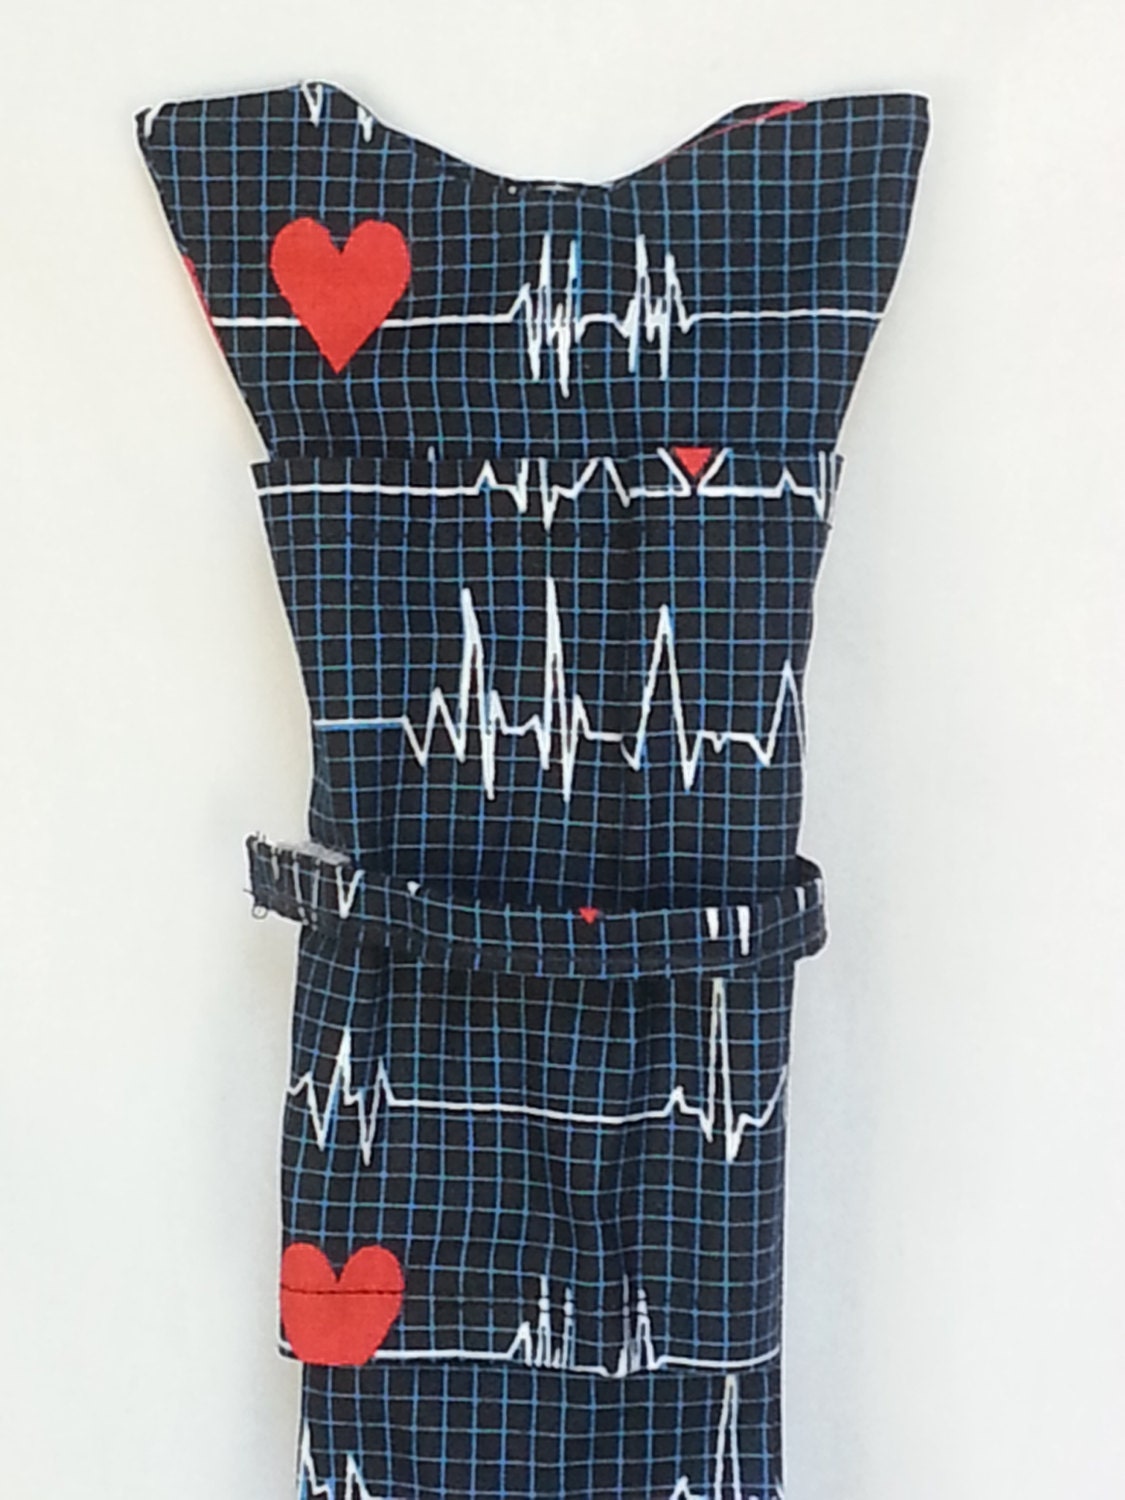 EKG STETHOSCOPE COVER or Sock Ecg Heartbeats Qrs Complex | Etsy